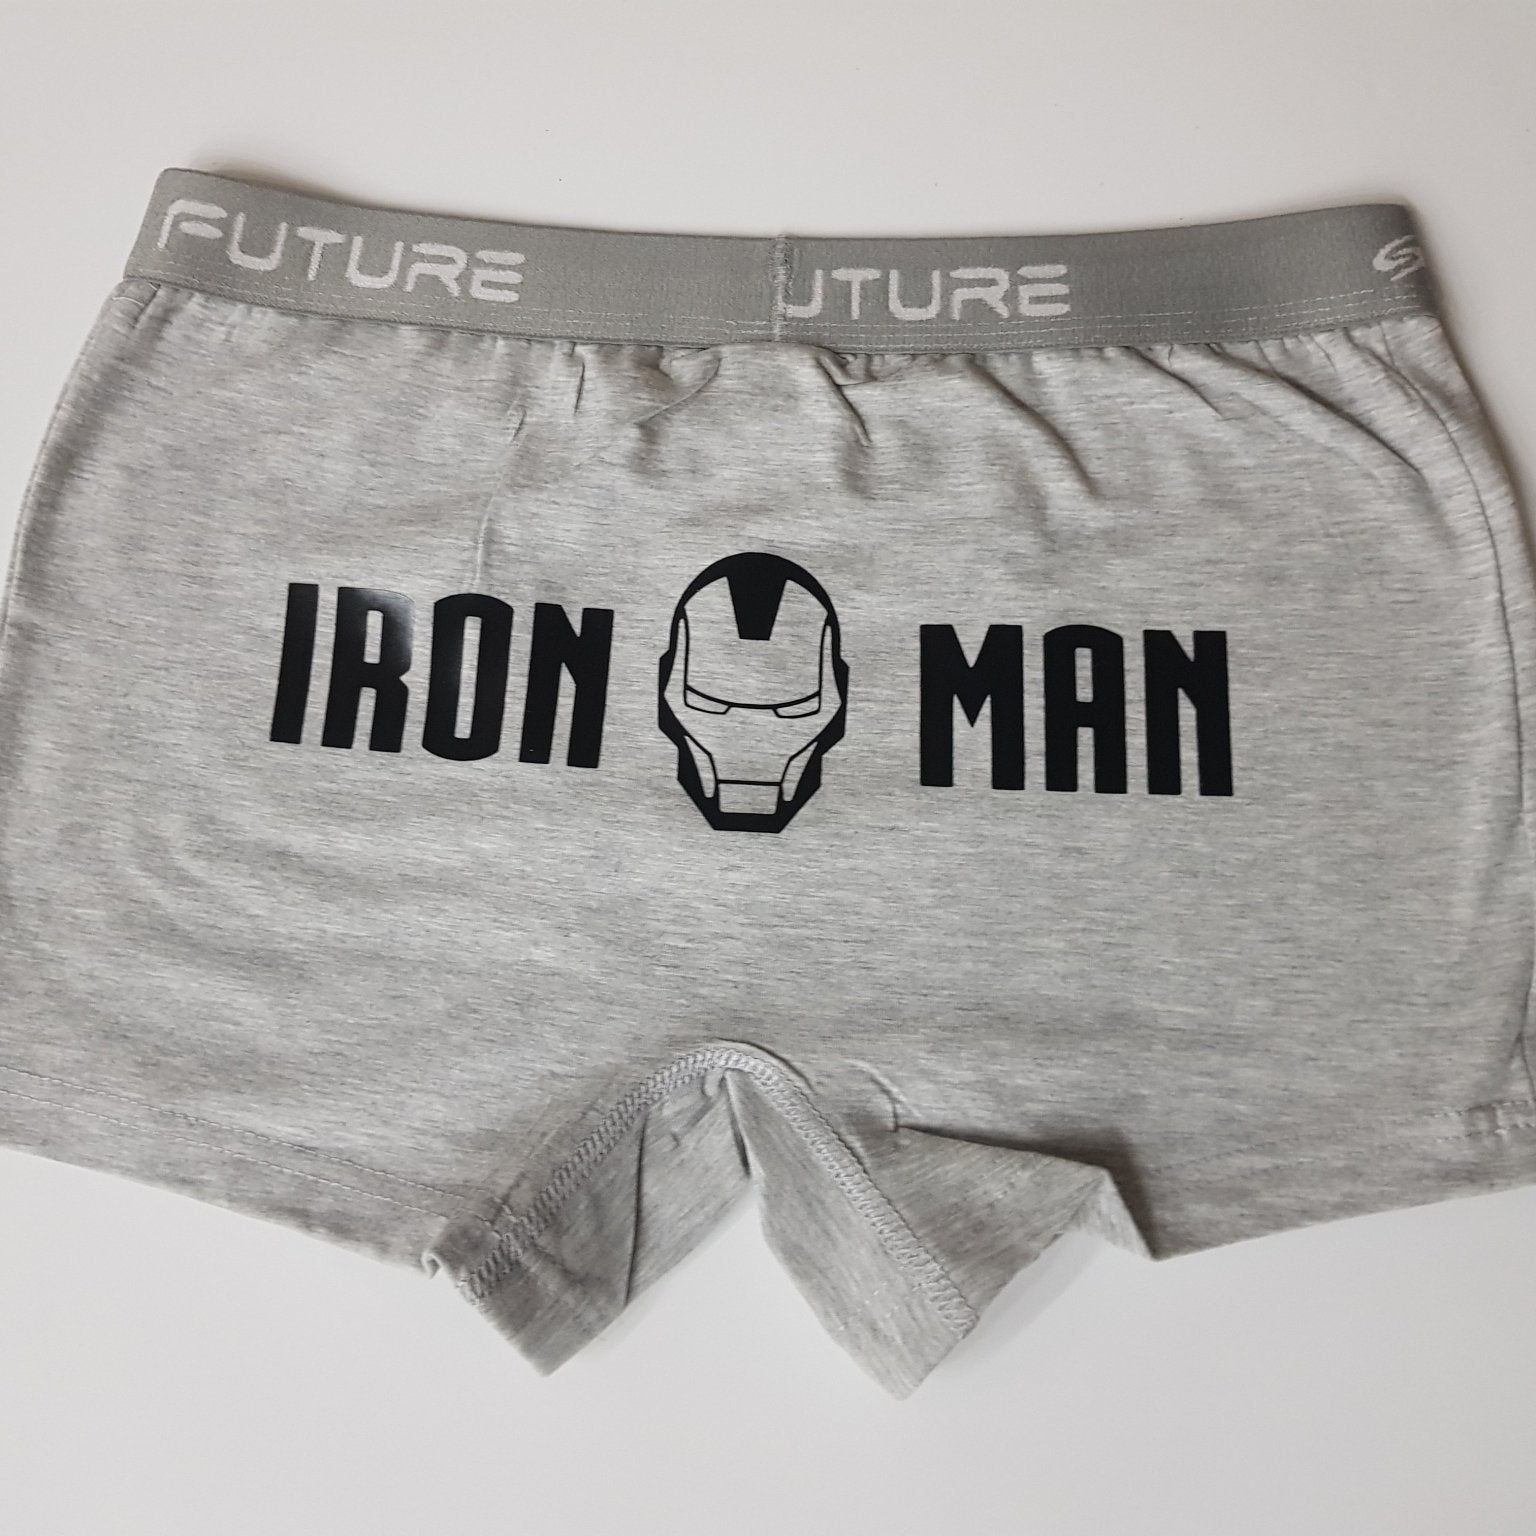 Men underwear - Iron Man - Etba3lly